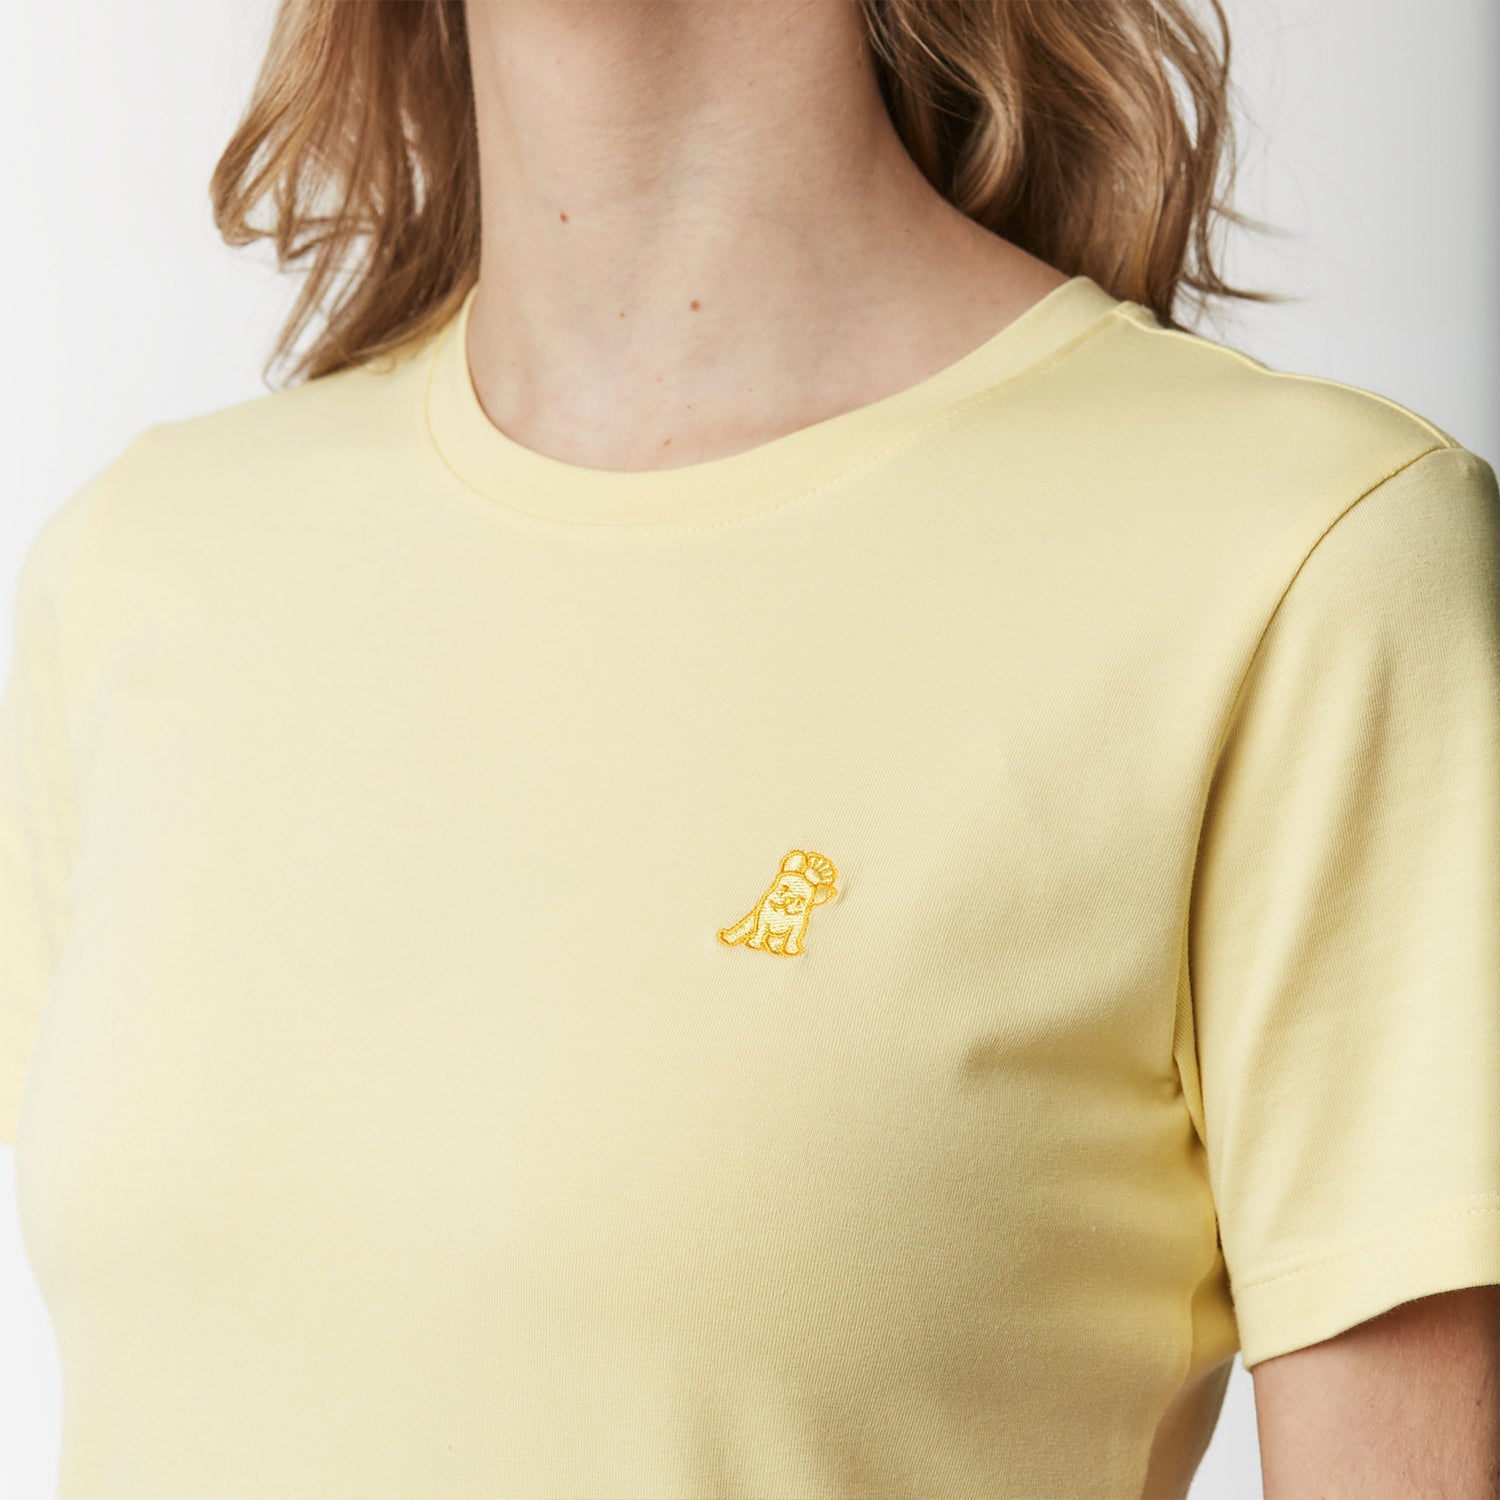 Women's Crew Neck T-Shirts: Wardrobe Must-Have – JAMES BARK